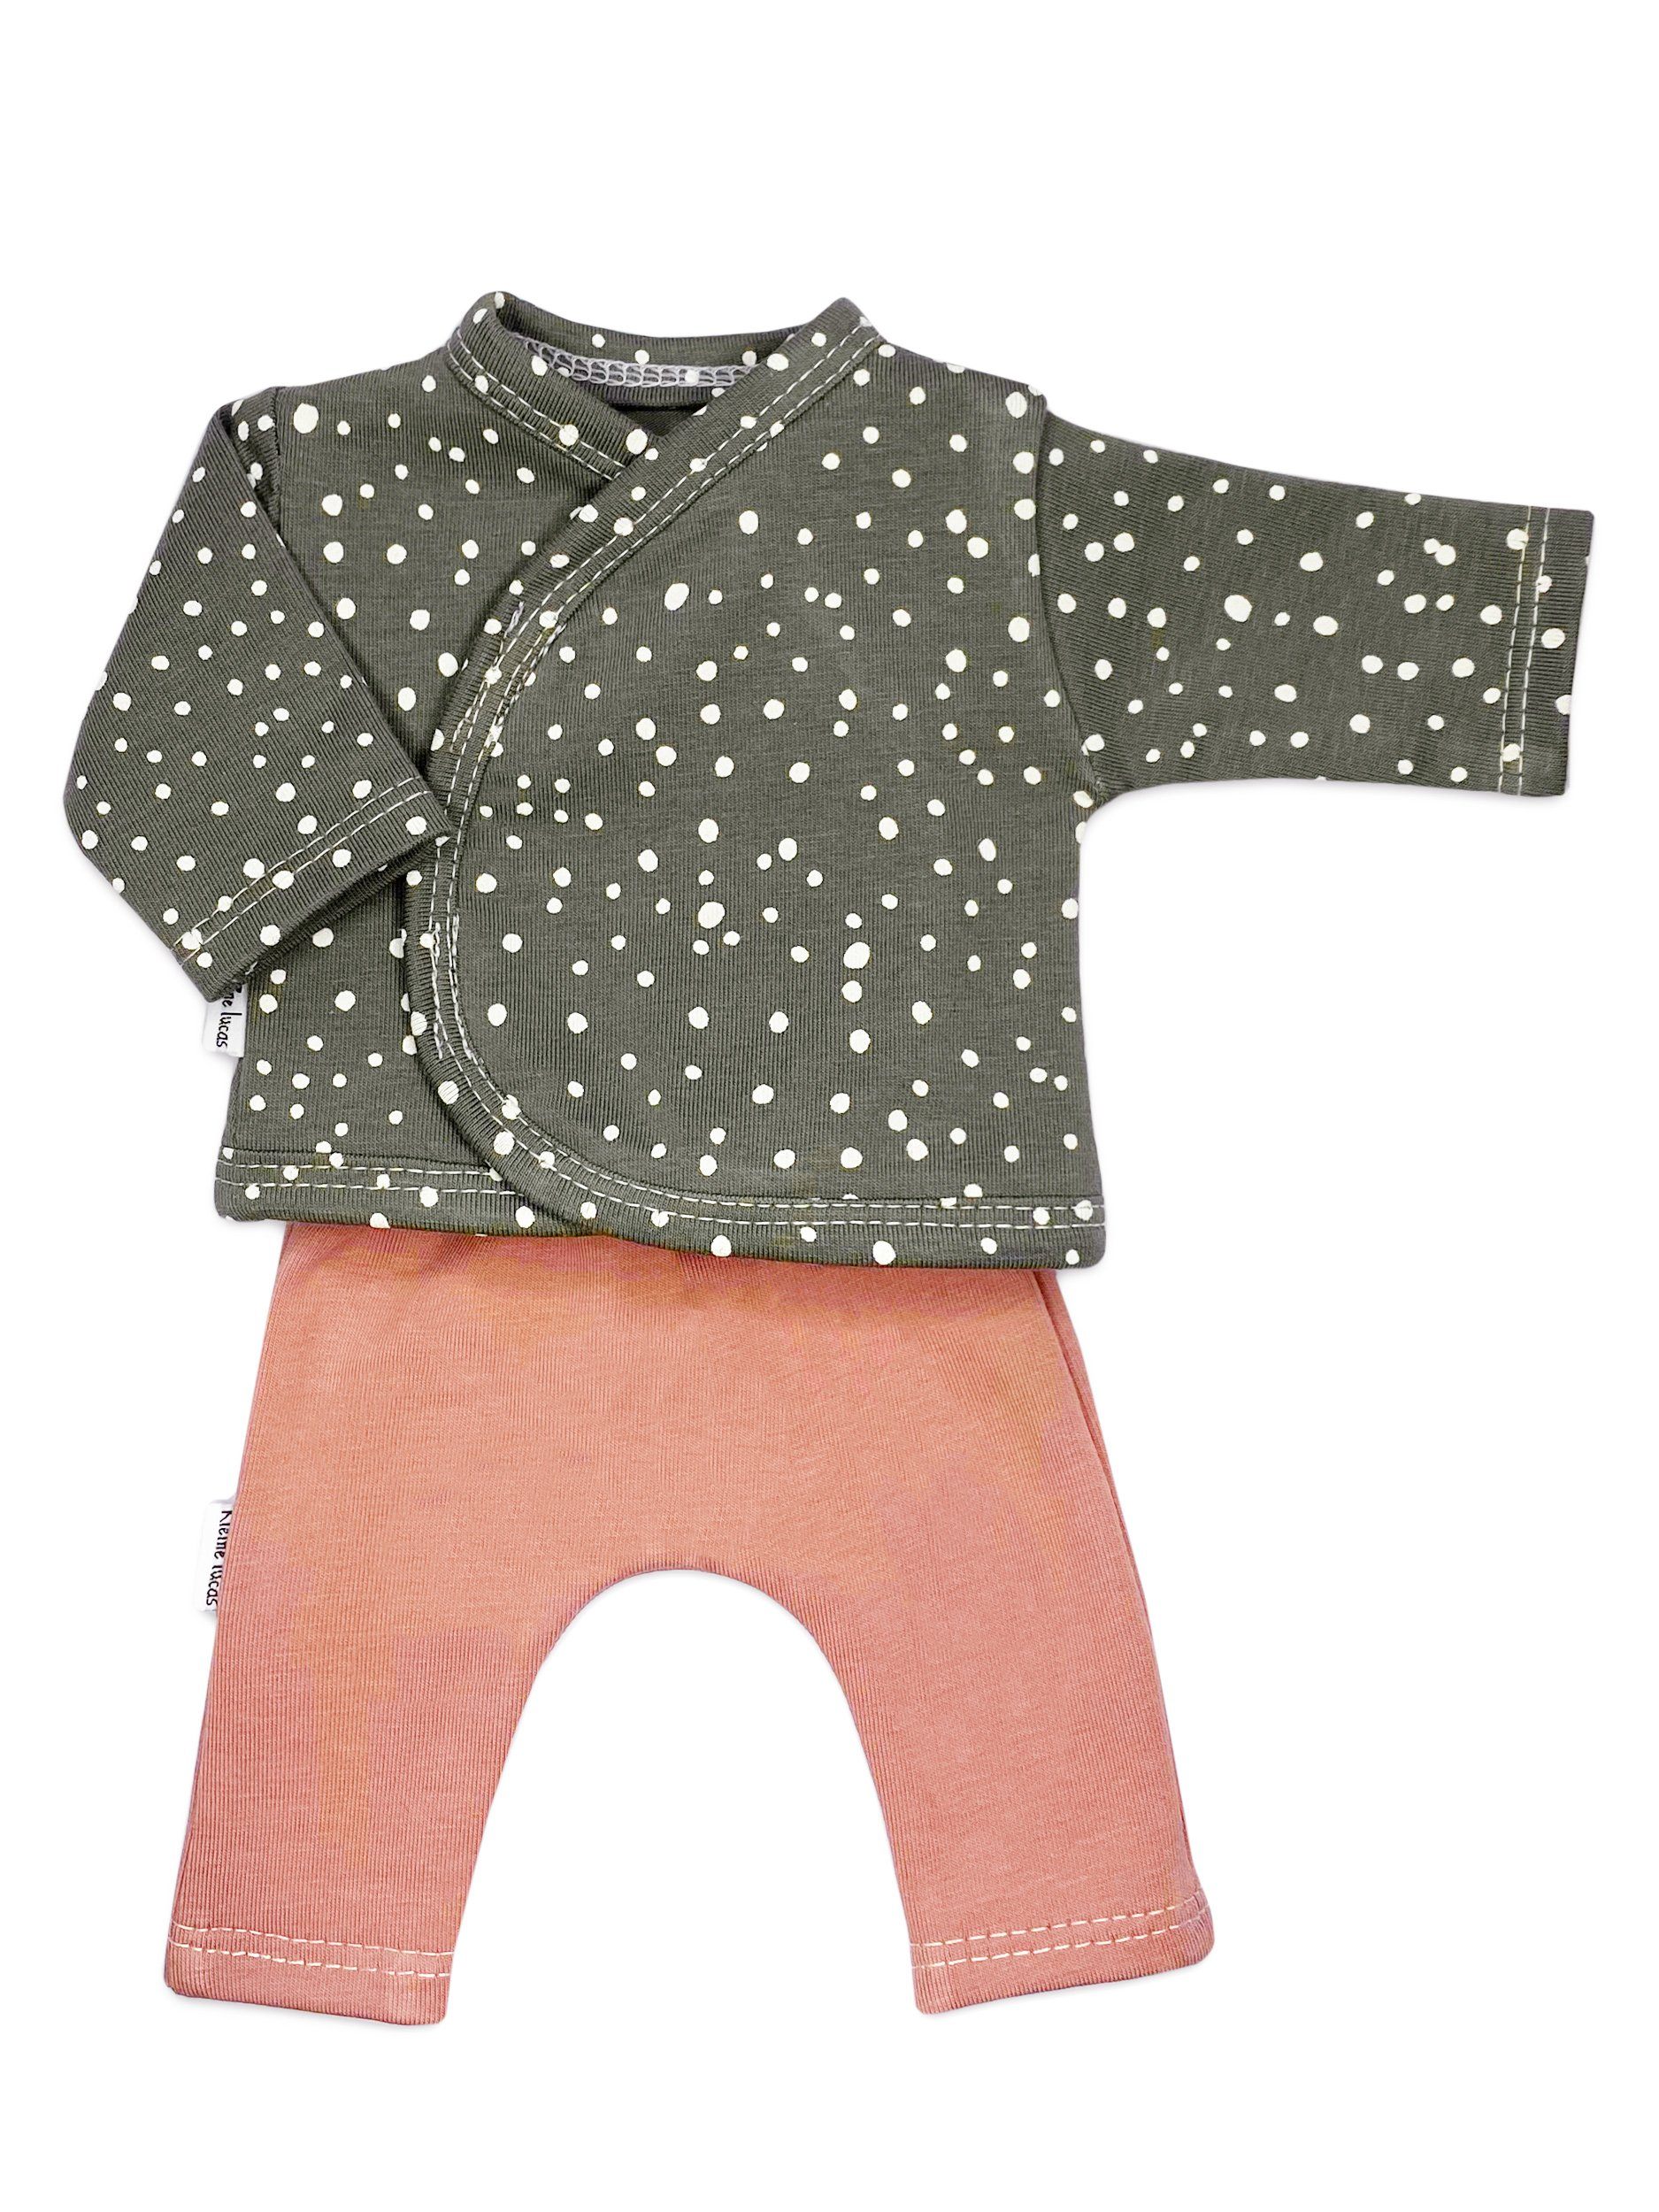 Top & Trouser Set, Polkadot Grey & Pink Top & Trousers Little Lucas 